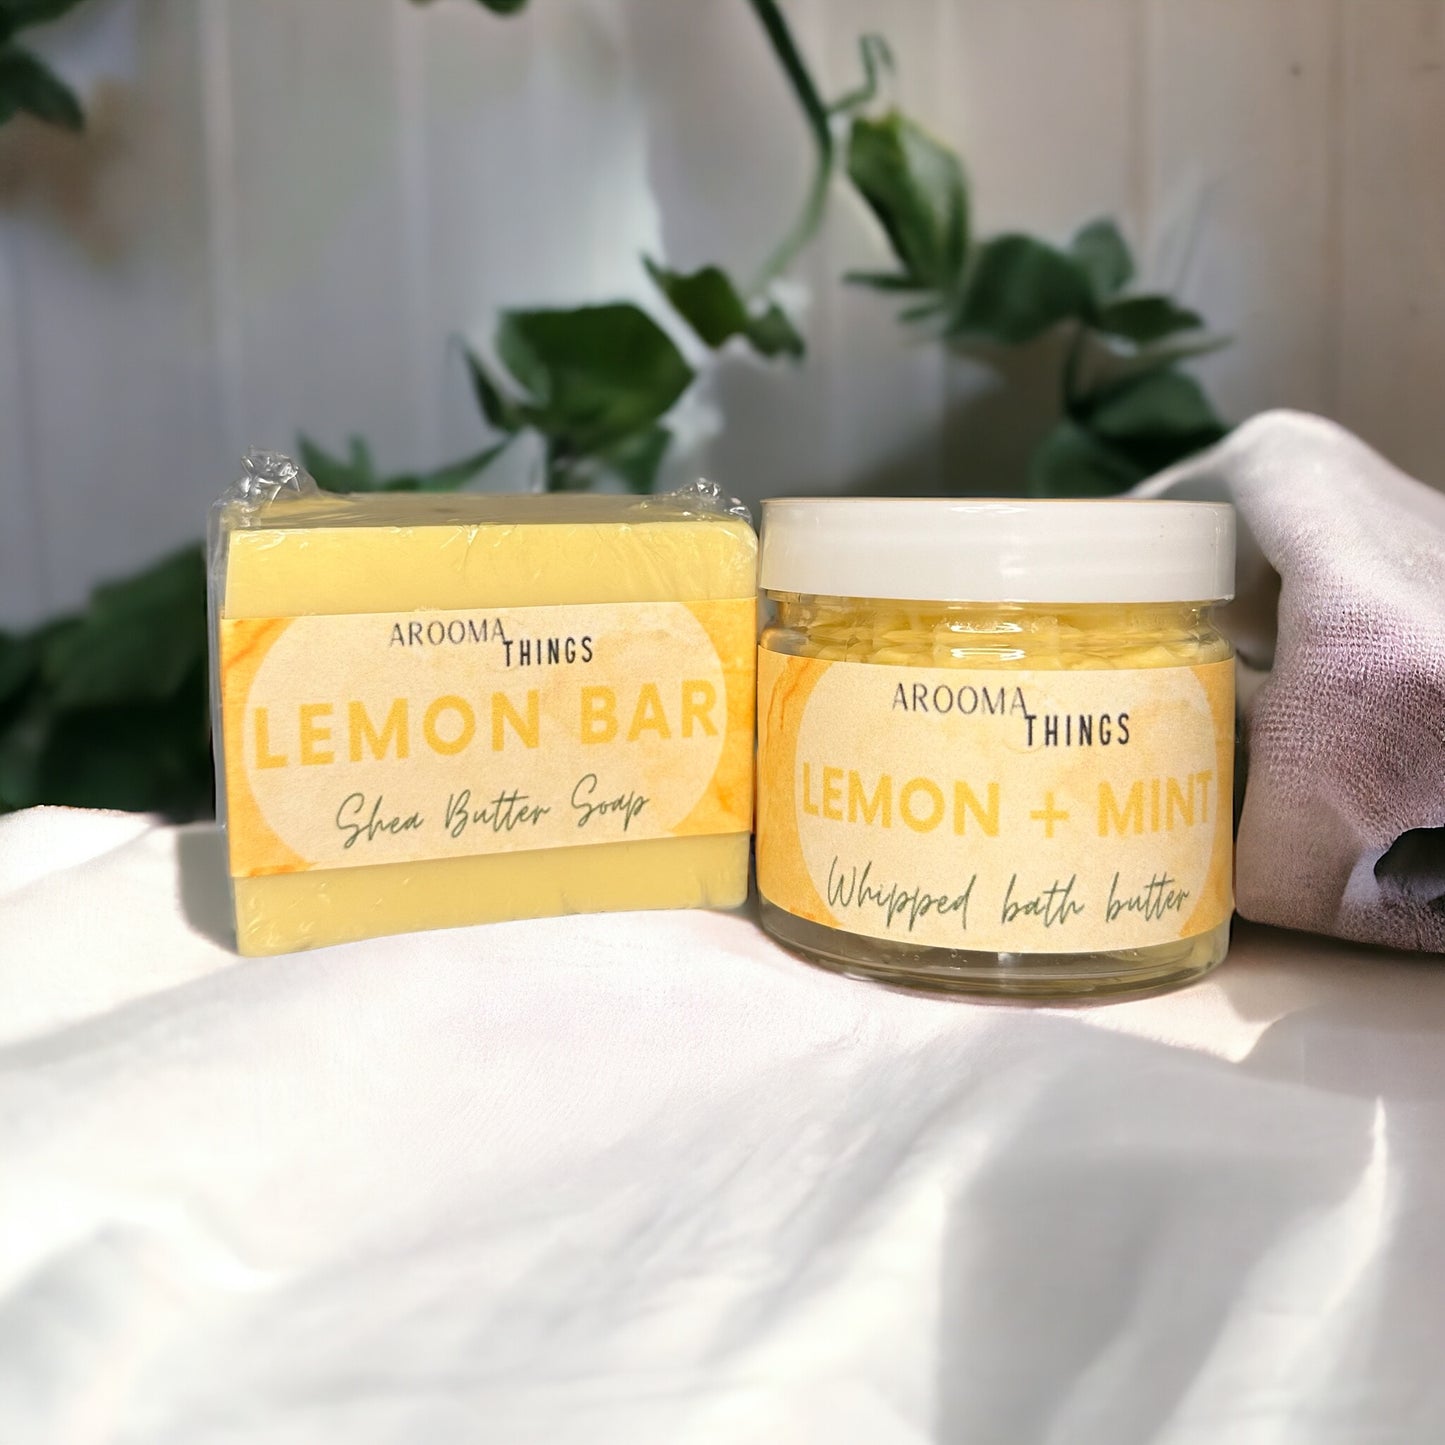 Lemon + Mint Whipped Bath Butter